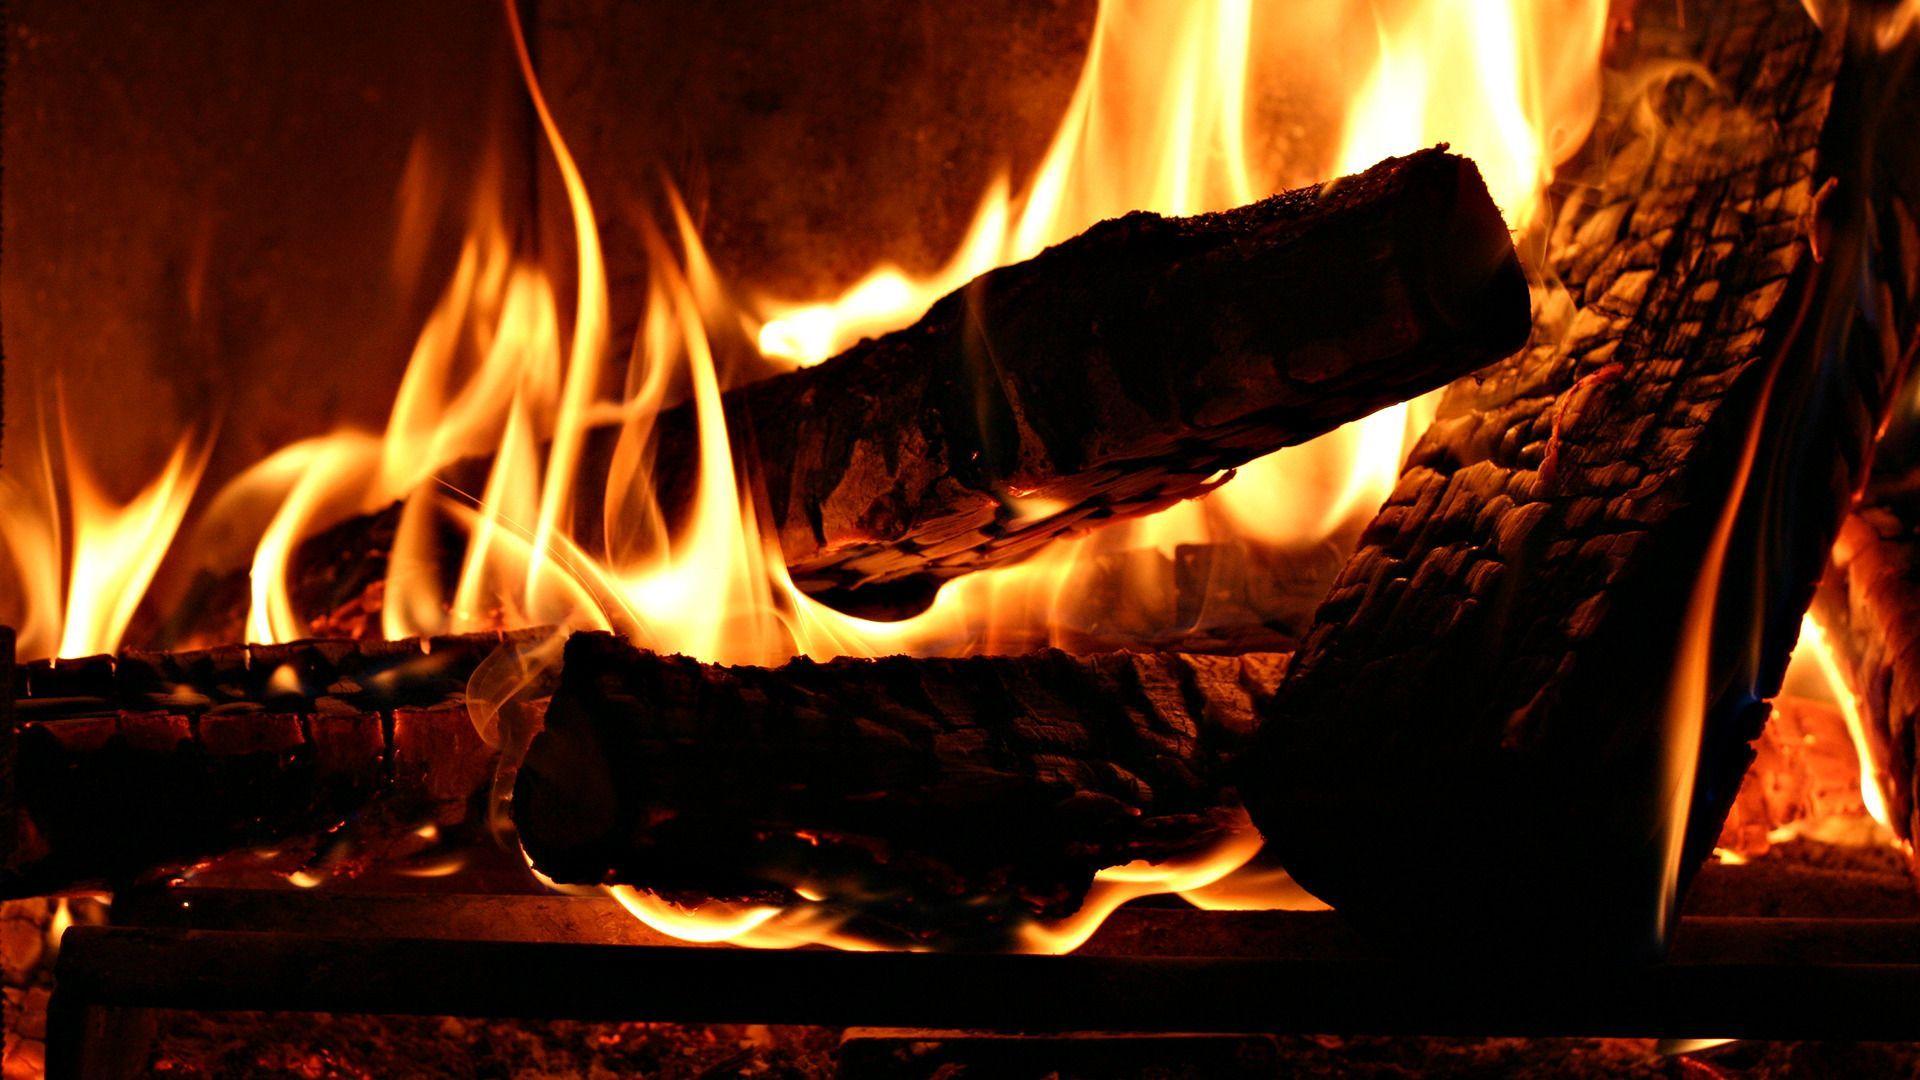 Fireplace Wallpaper 24632 1920x1080 px. Log wallpaper, Fireplace, Chimney sweep